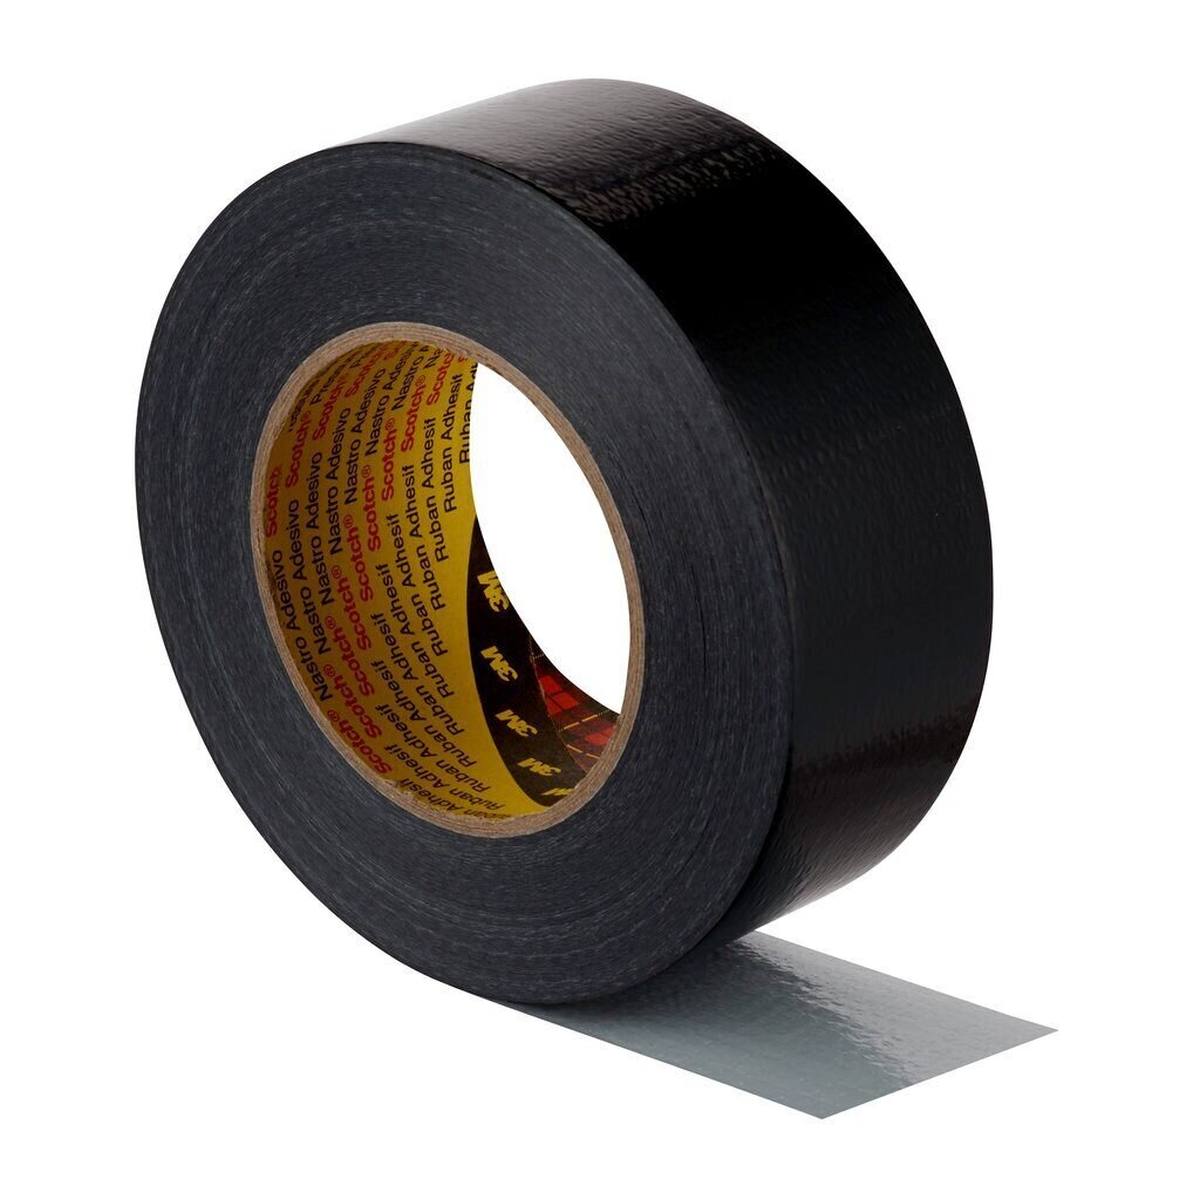 3M fabric adhesive tape 2904, black 48mm x 50m, 0.19mm